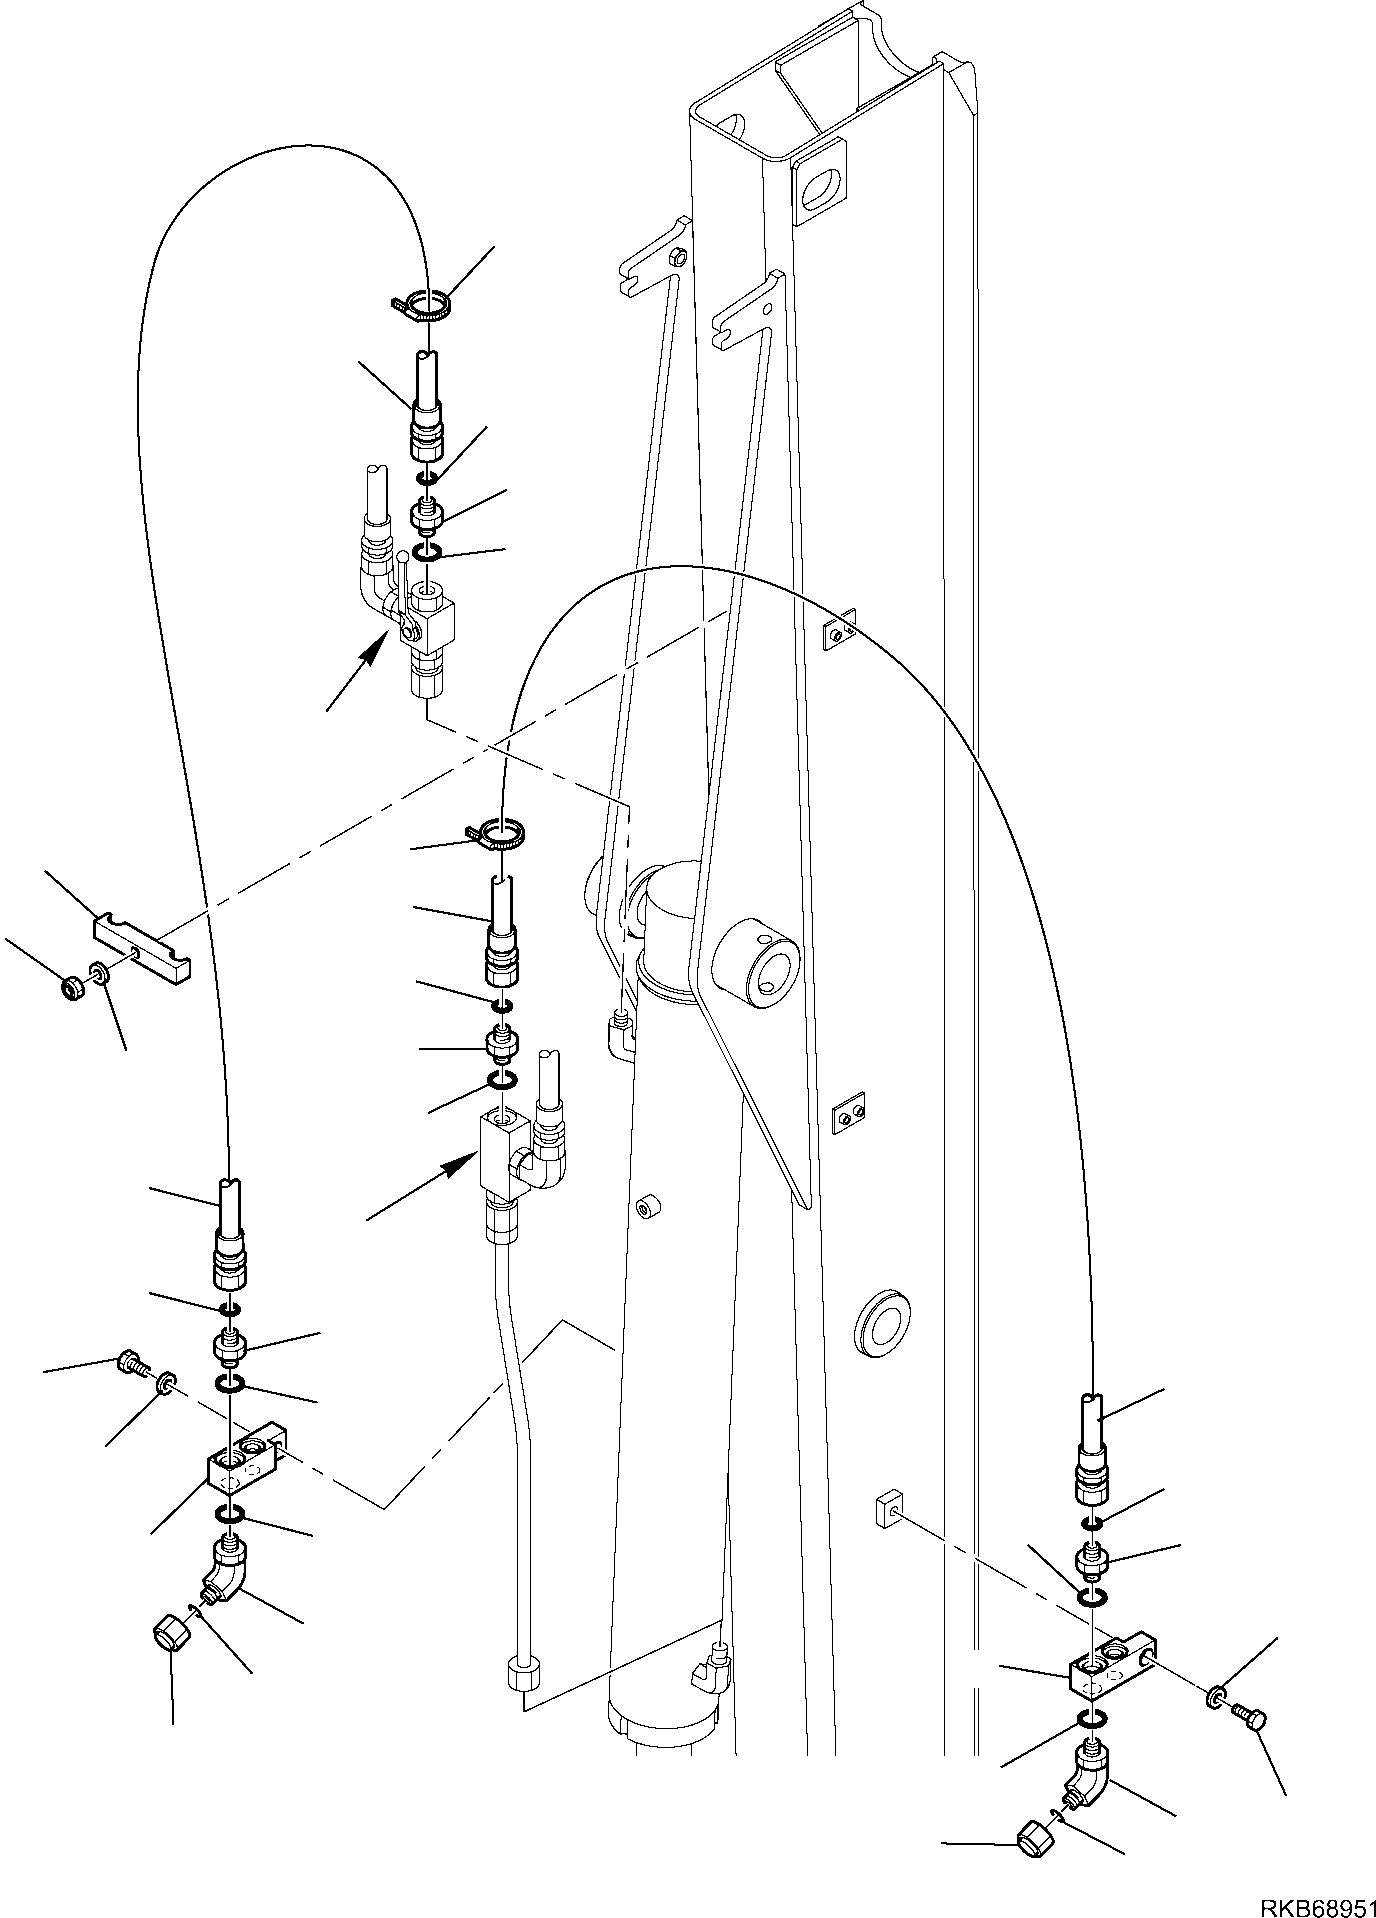 194. HYDRAULIC PIPING (CUTTING AND ROTATING BUCKET) (3/3) [6920] - Komatsu part WB97S-5E0 S/N F30451- UP [wb97s5e1]